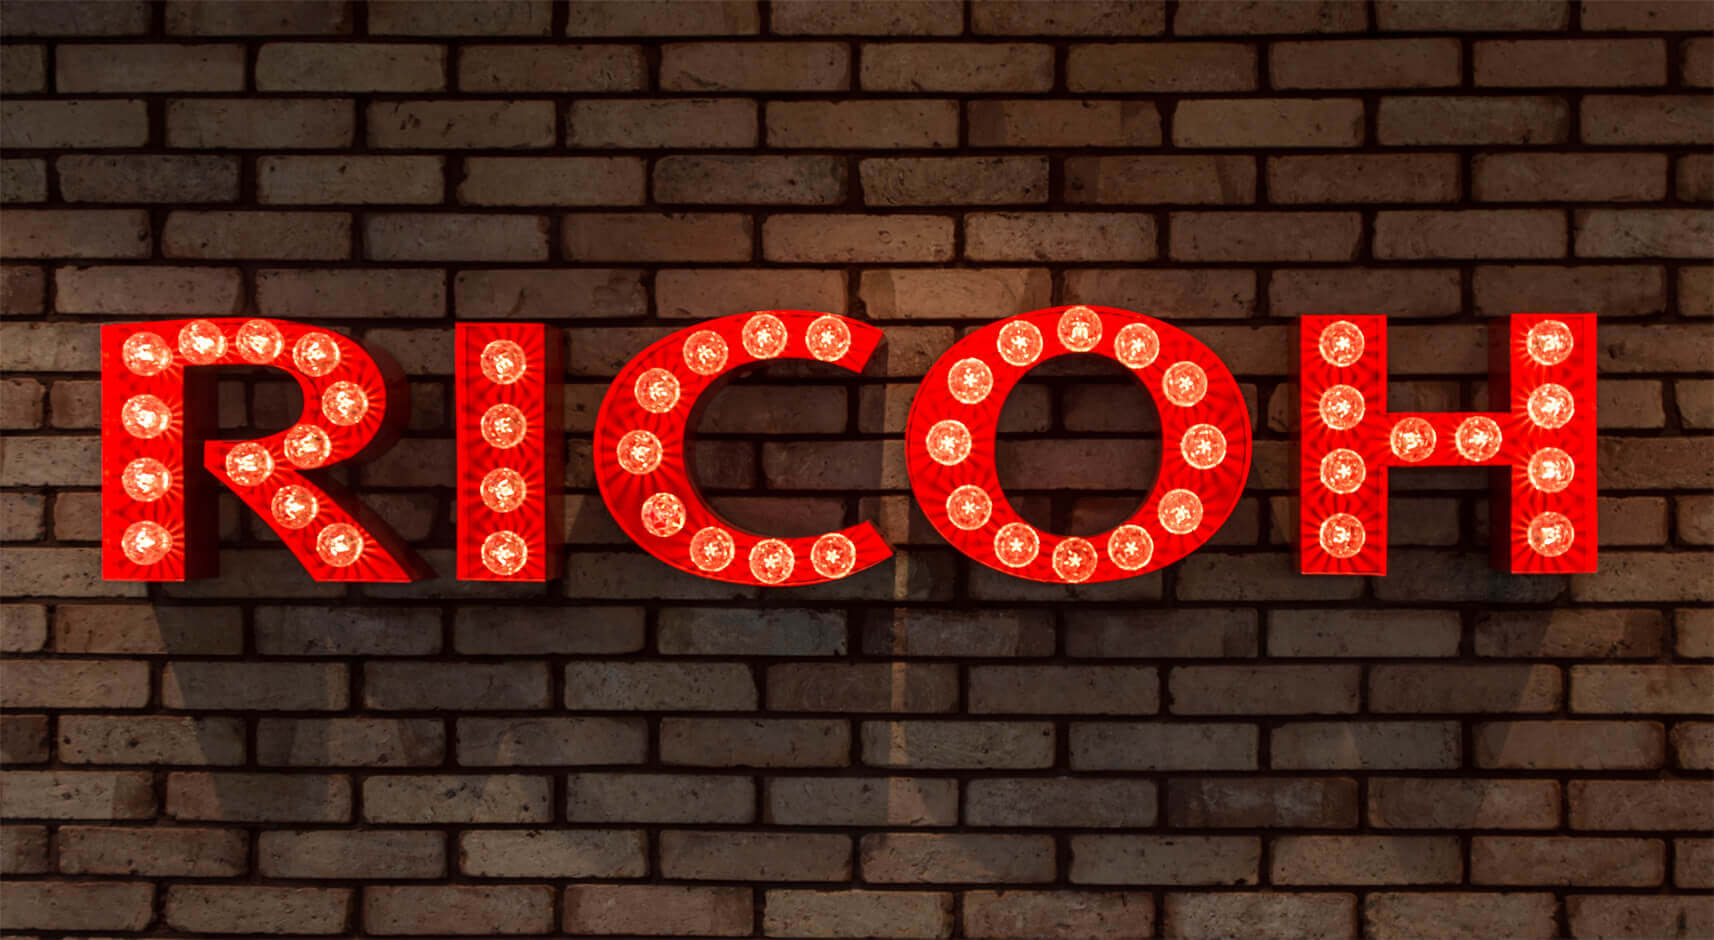 RICOH - RICOH - Letters with light bulbs on a brick wall